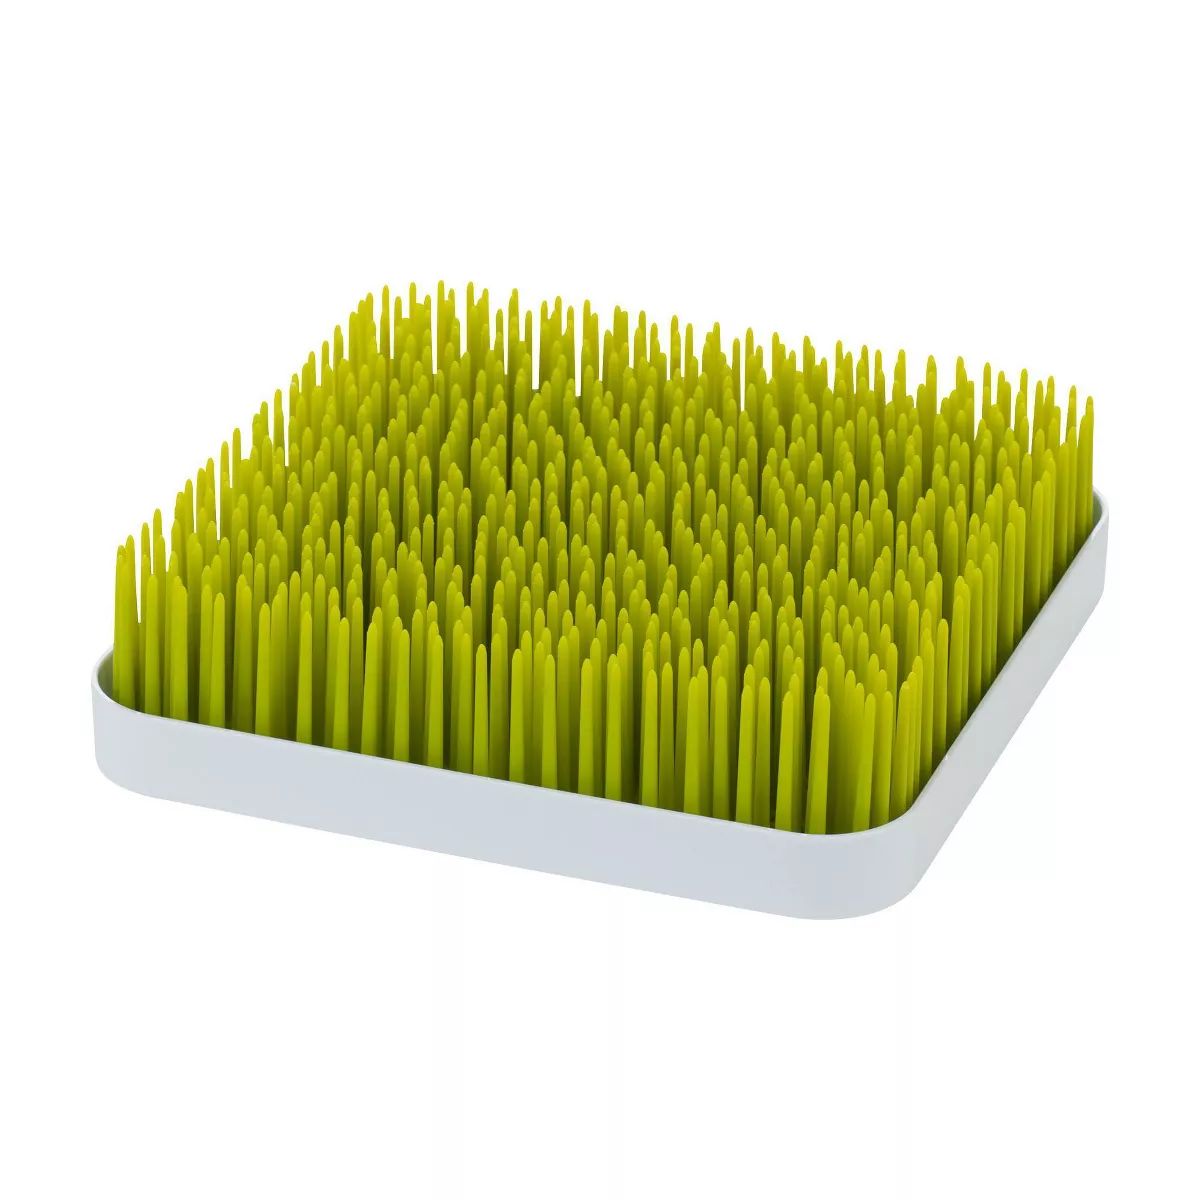 Boon Grass Countertop Drying Rack | Target